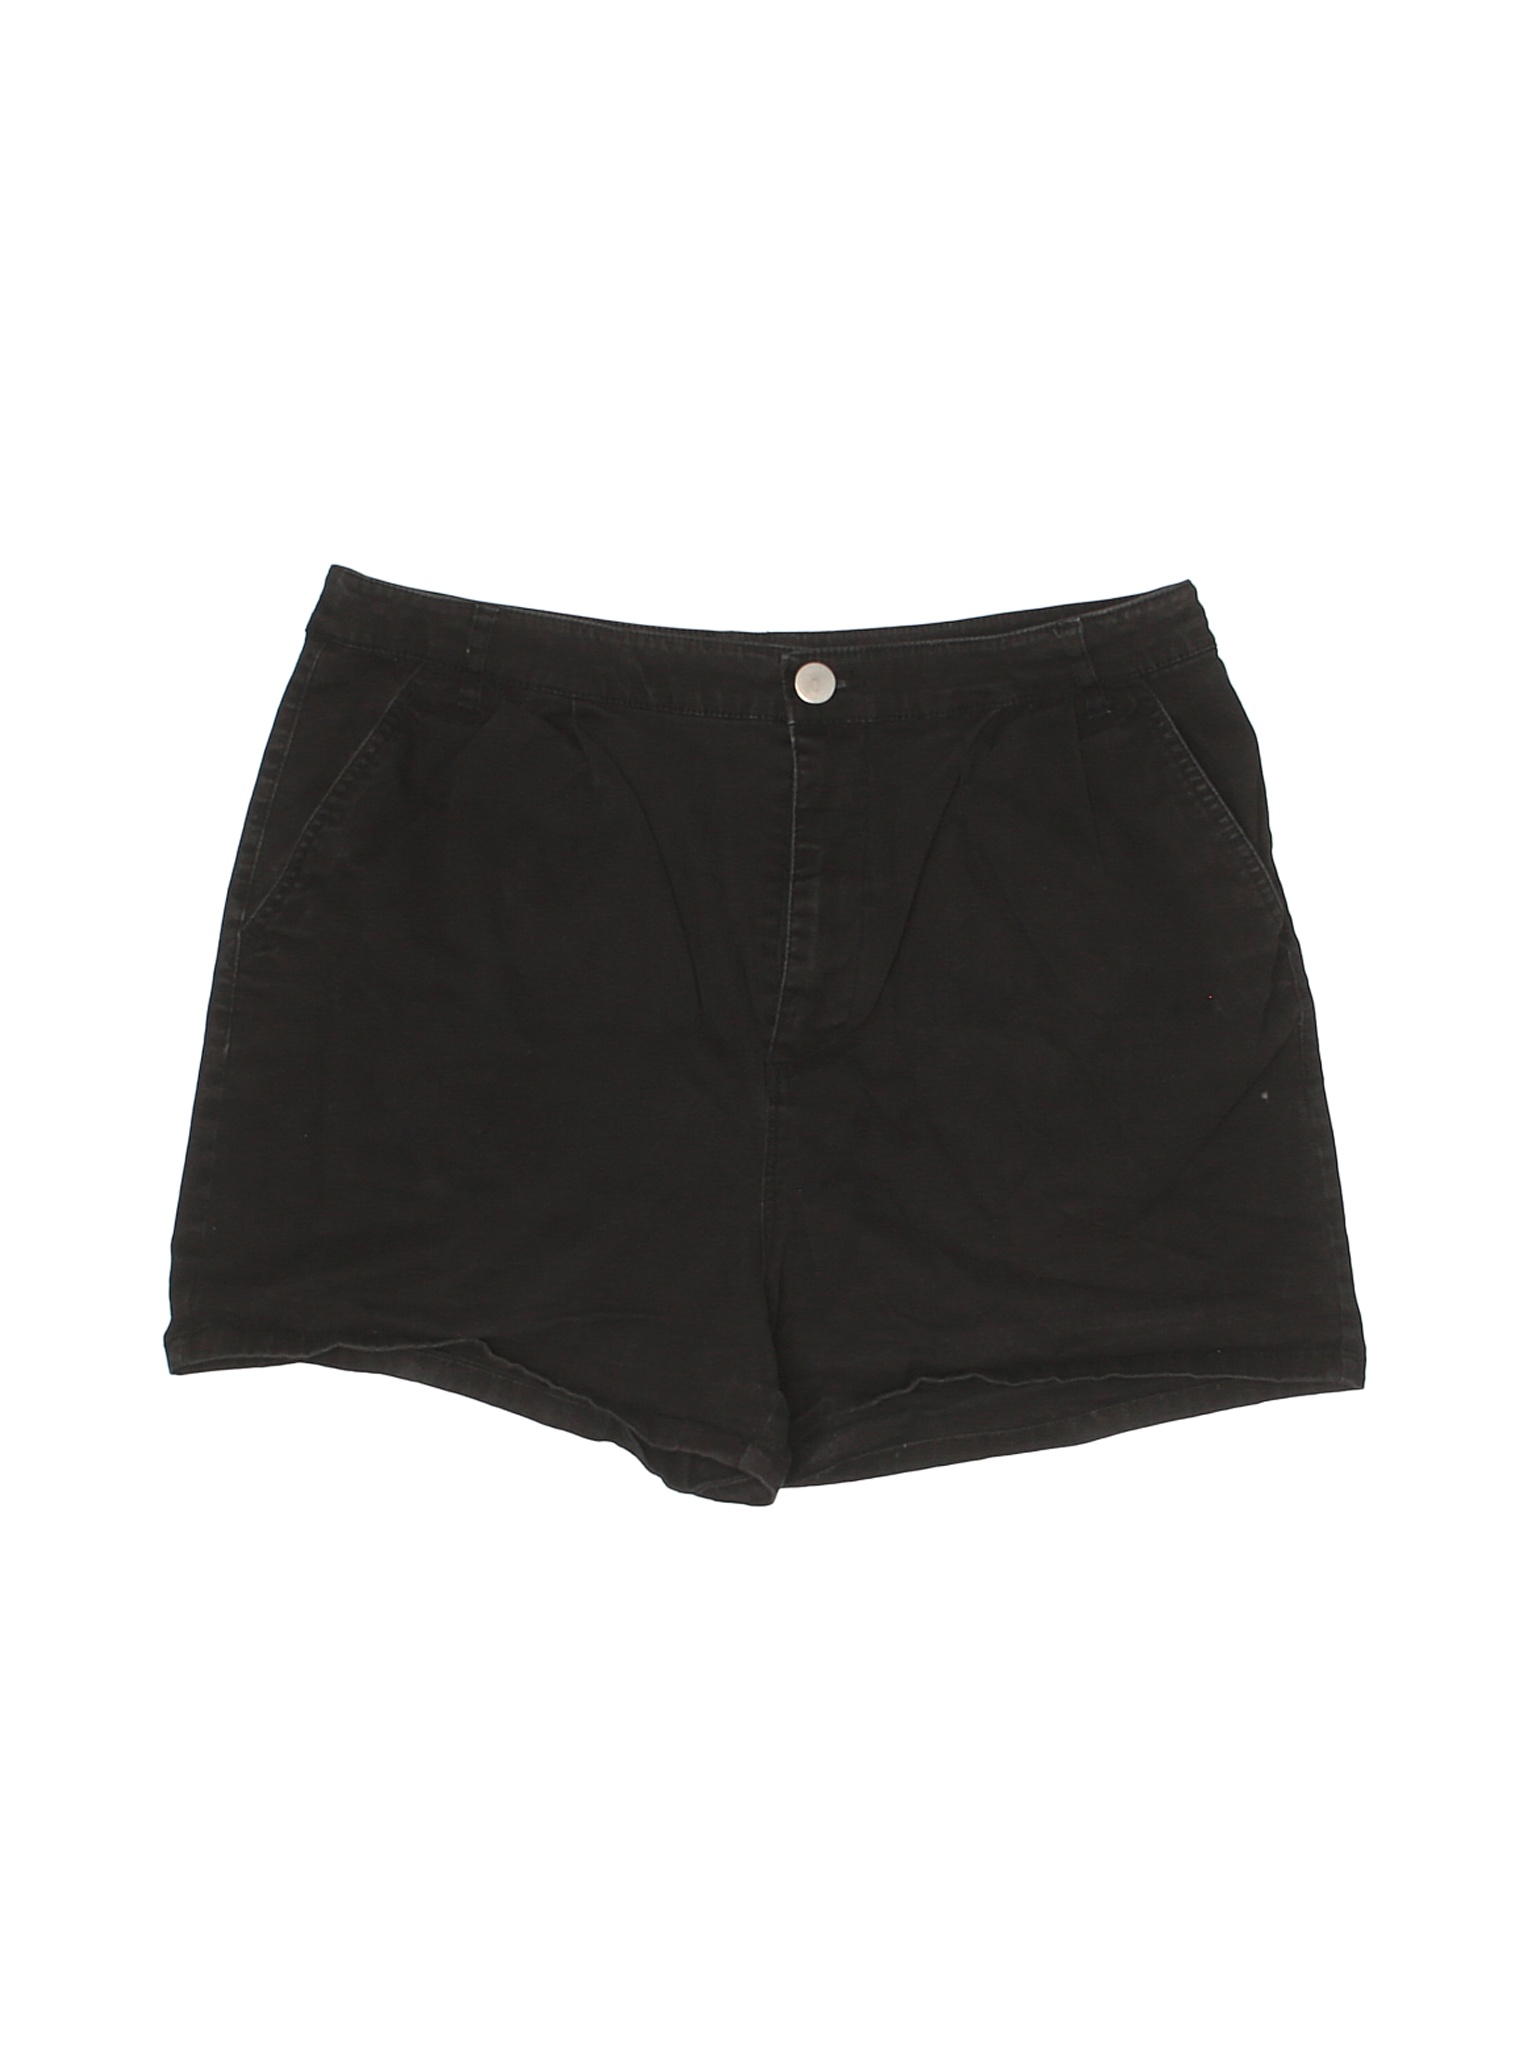 ASOS Women Black Shorts 12 | eBay